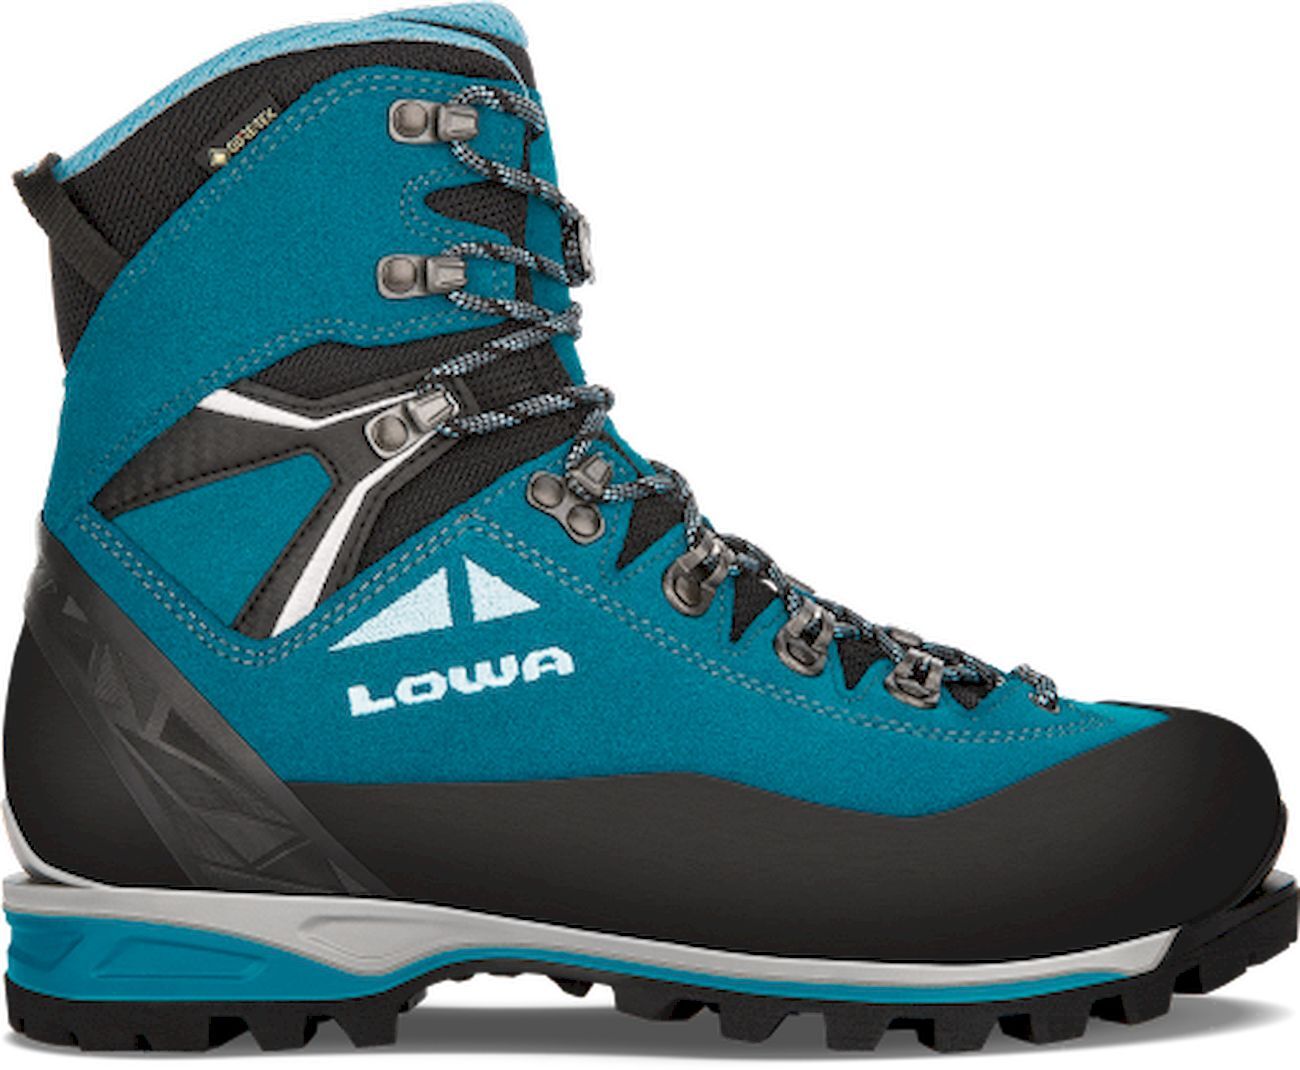 Lowa Alpine Expert ll GTX - Mountaineering boots - Women's